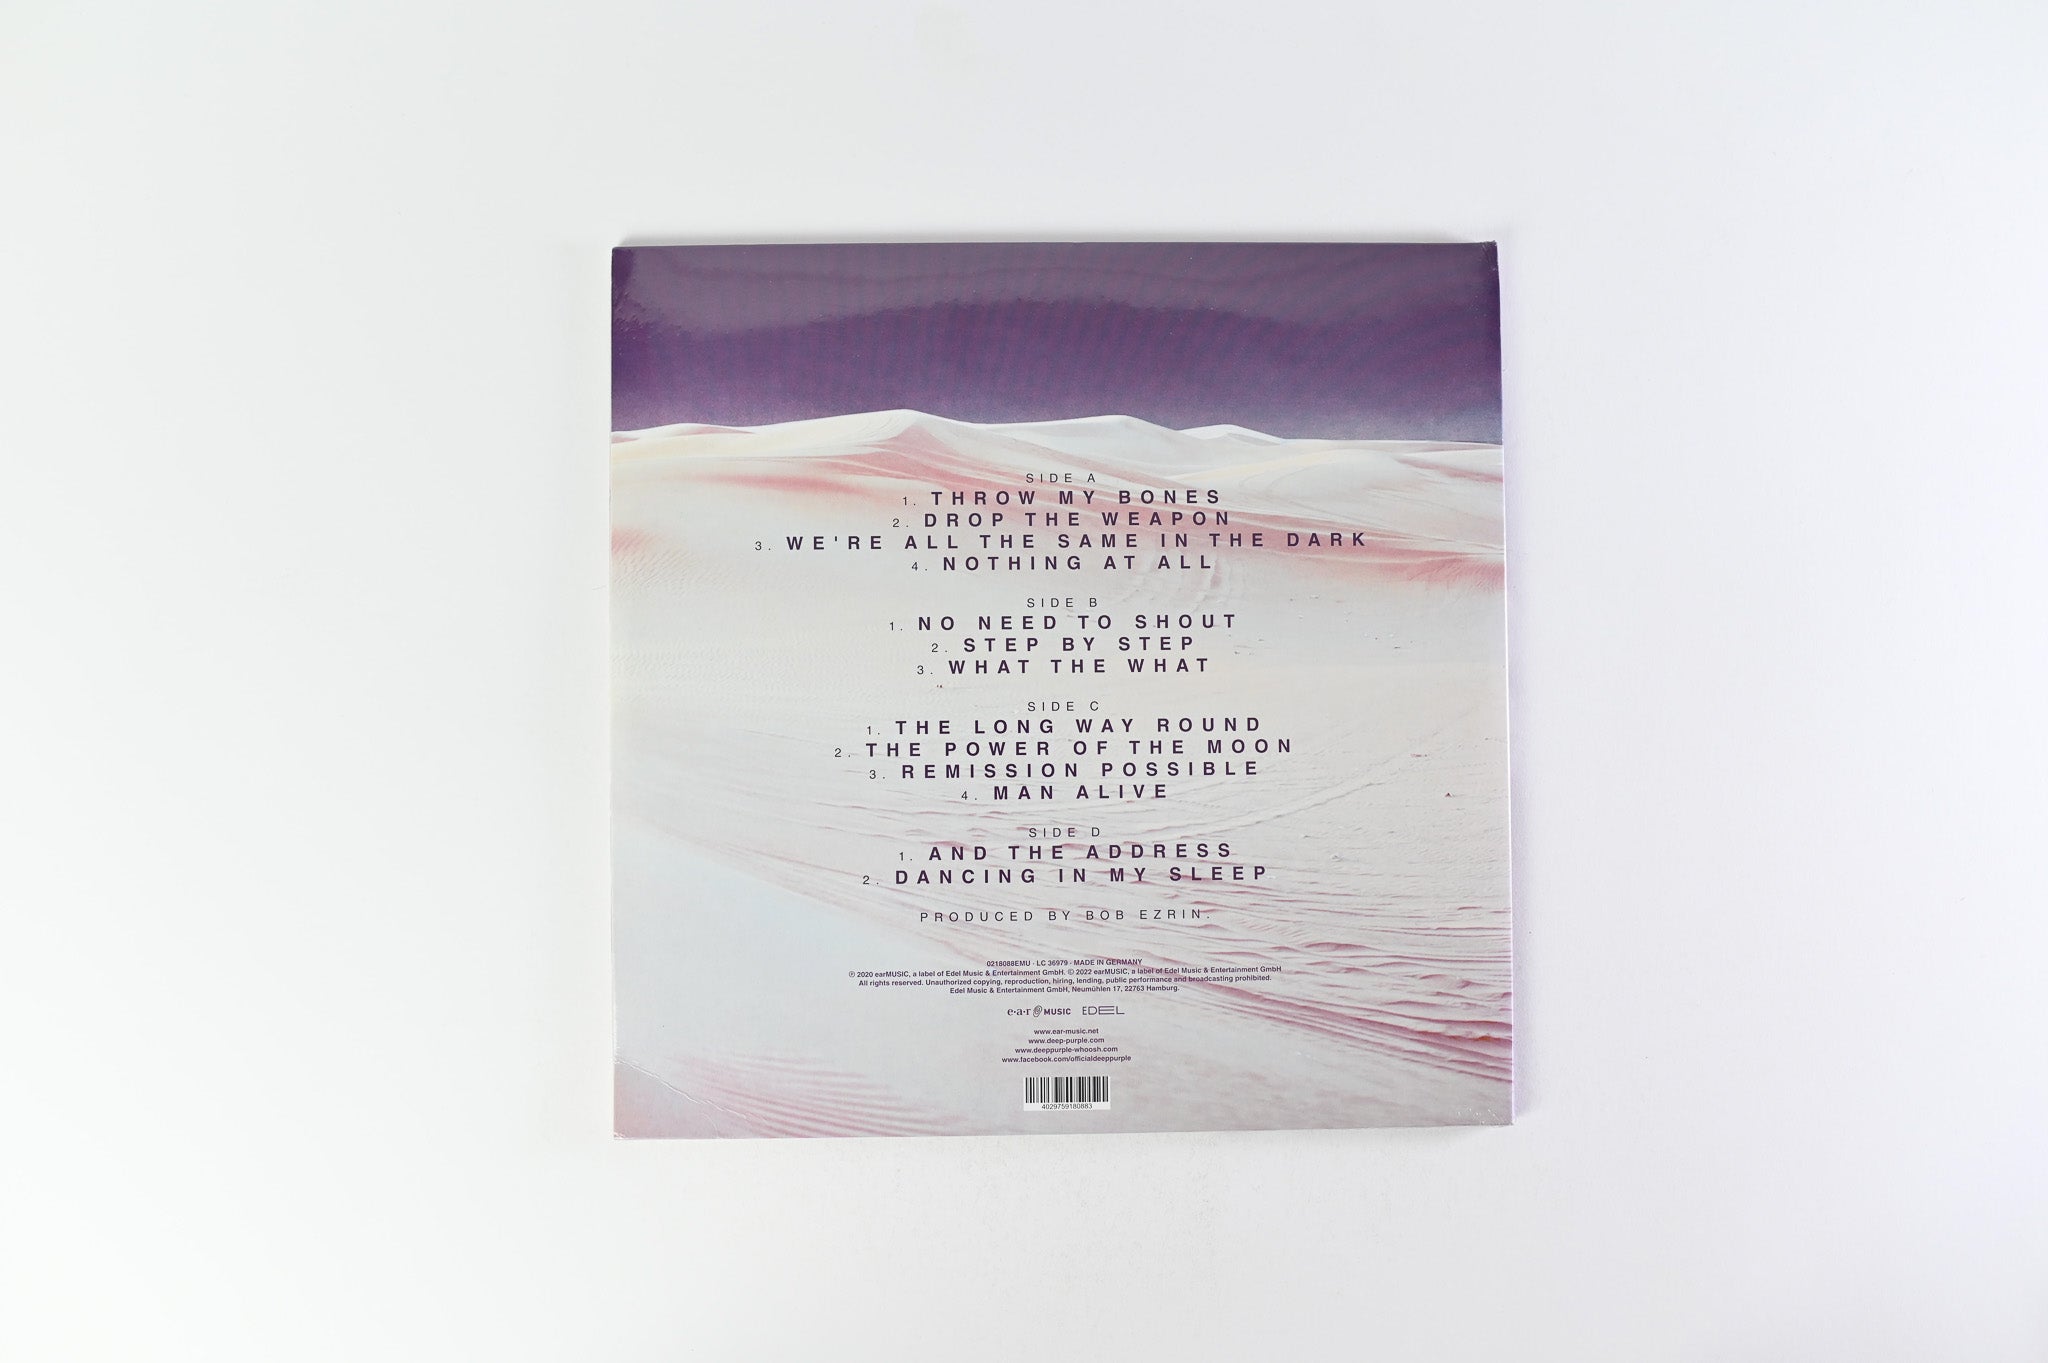 Olivia Rodrigo - Guts LP (Indie Exclusive Lavender Vinyl) – Eroding Winds